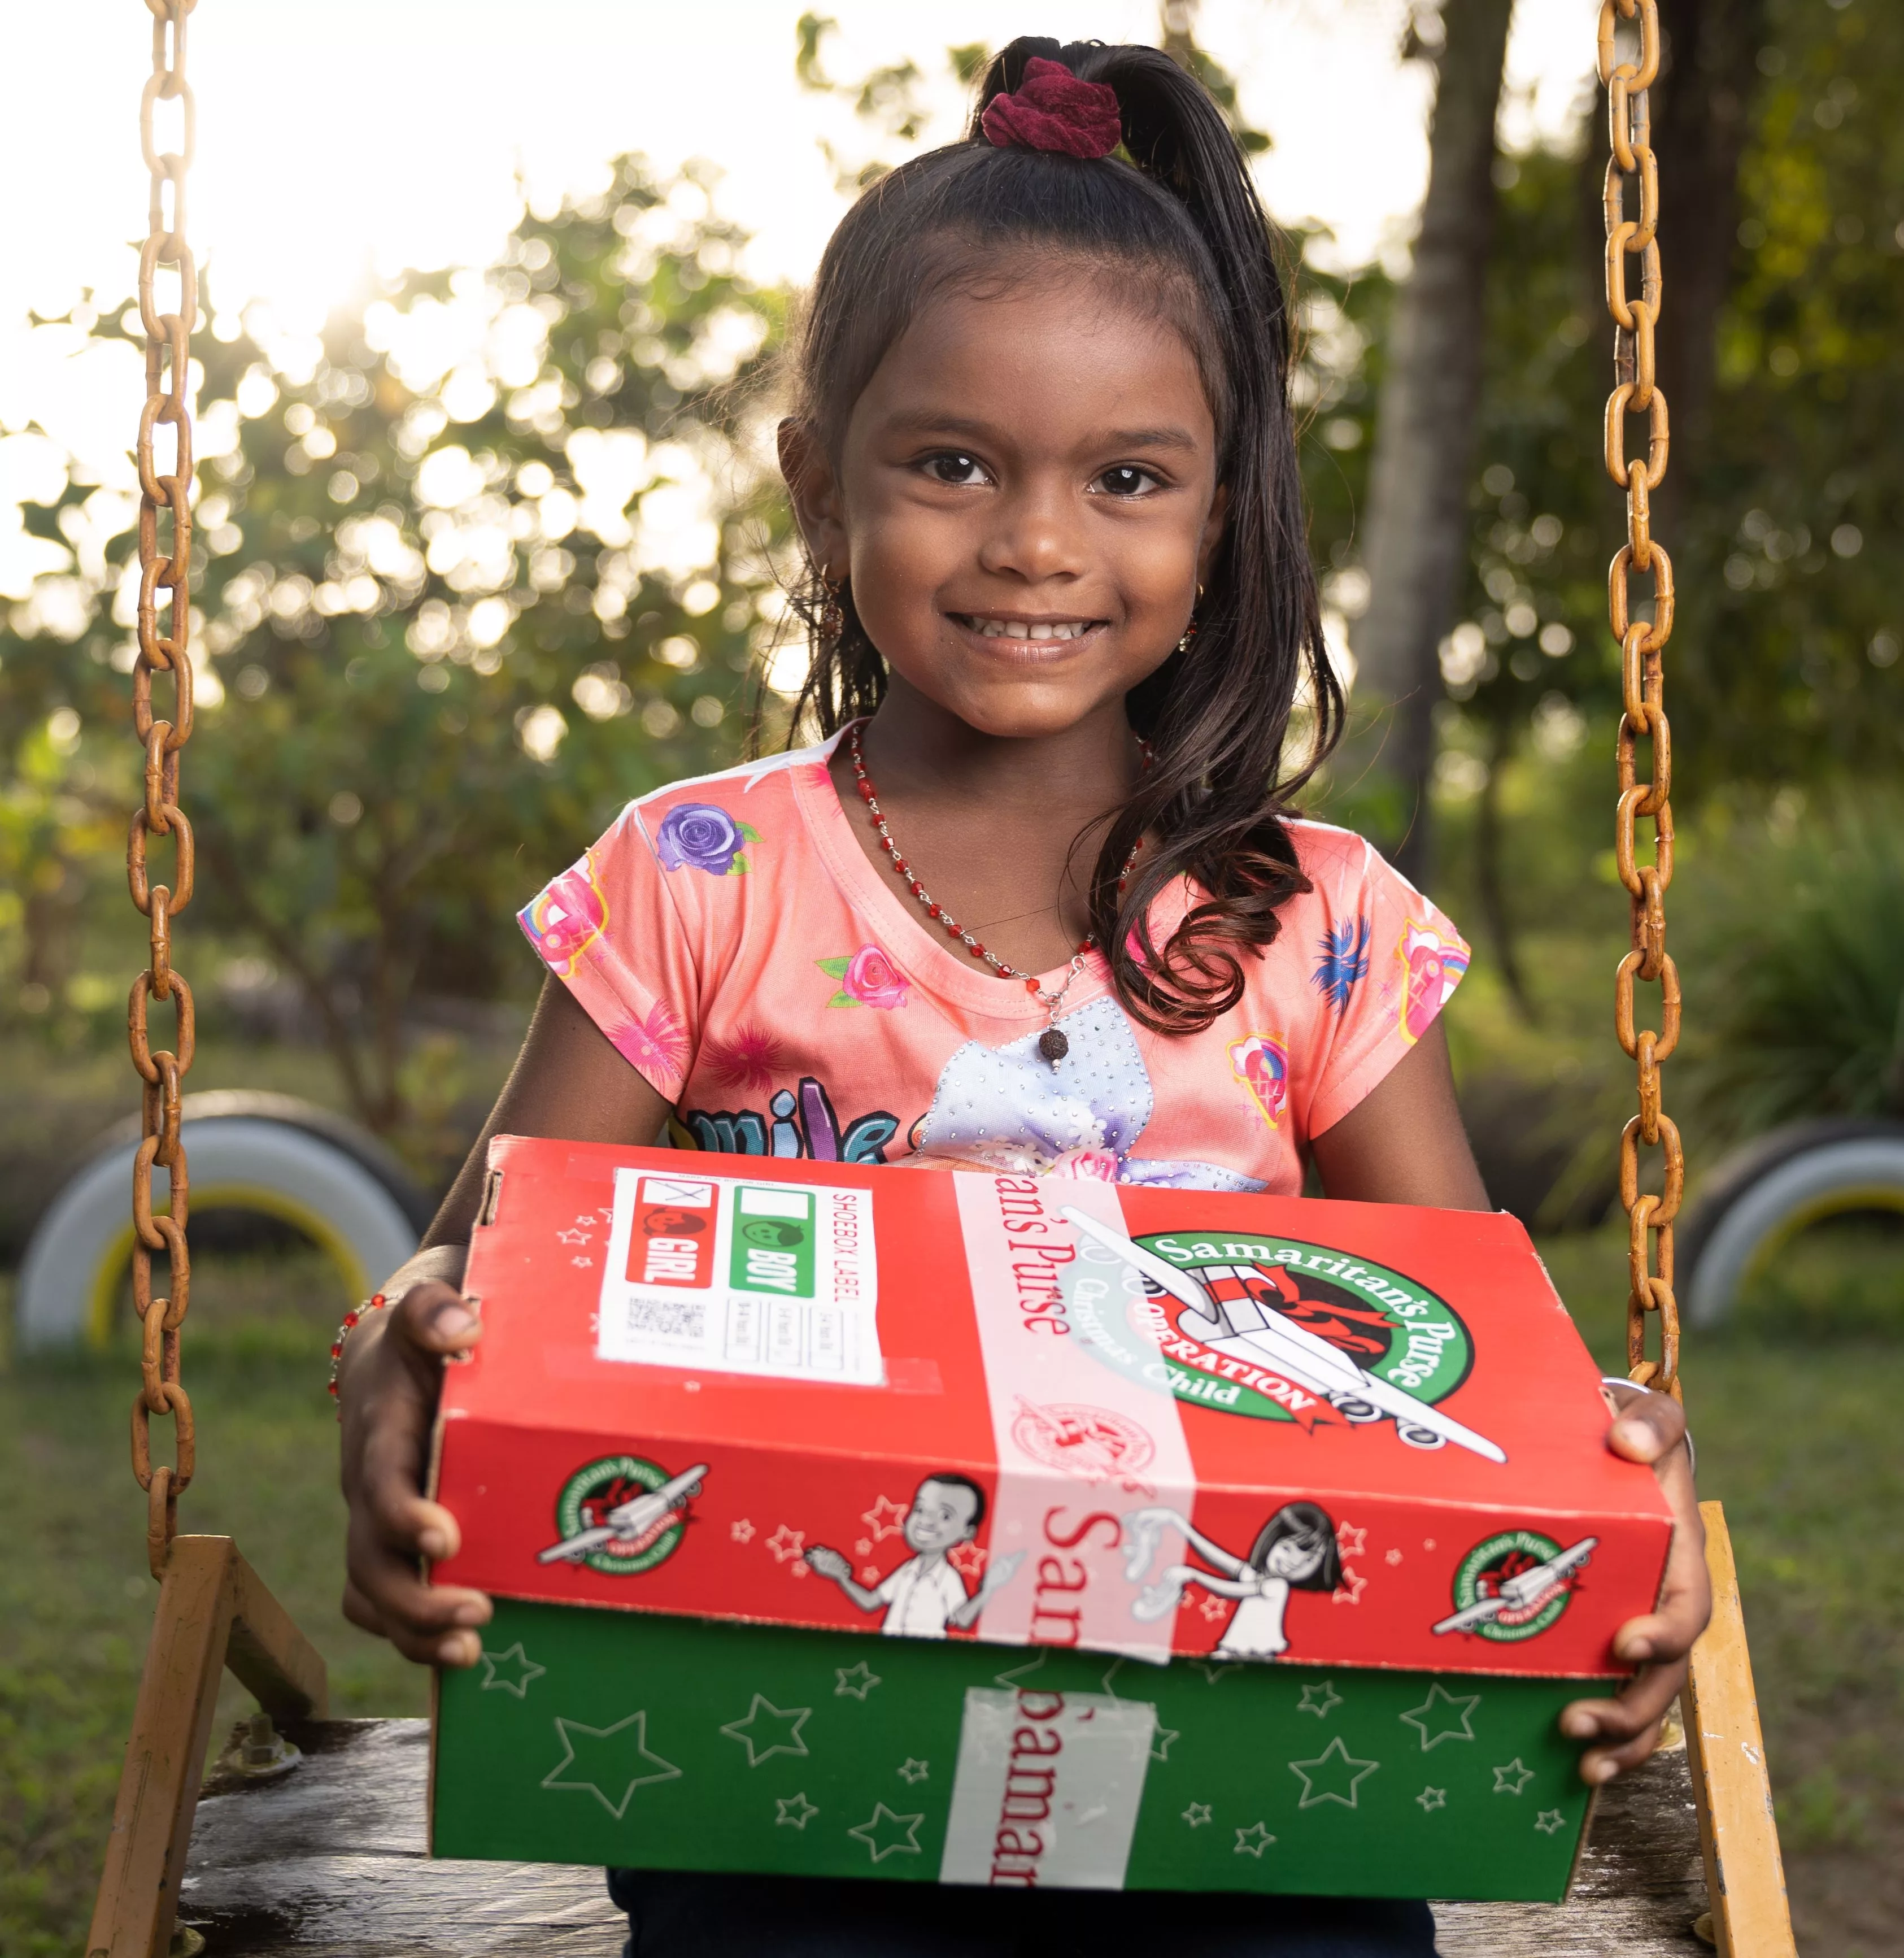 Operation Christmas Child sending shoeboxes of hope